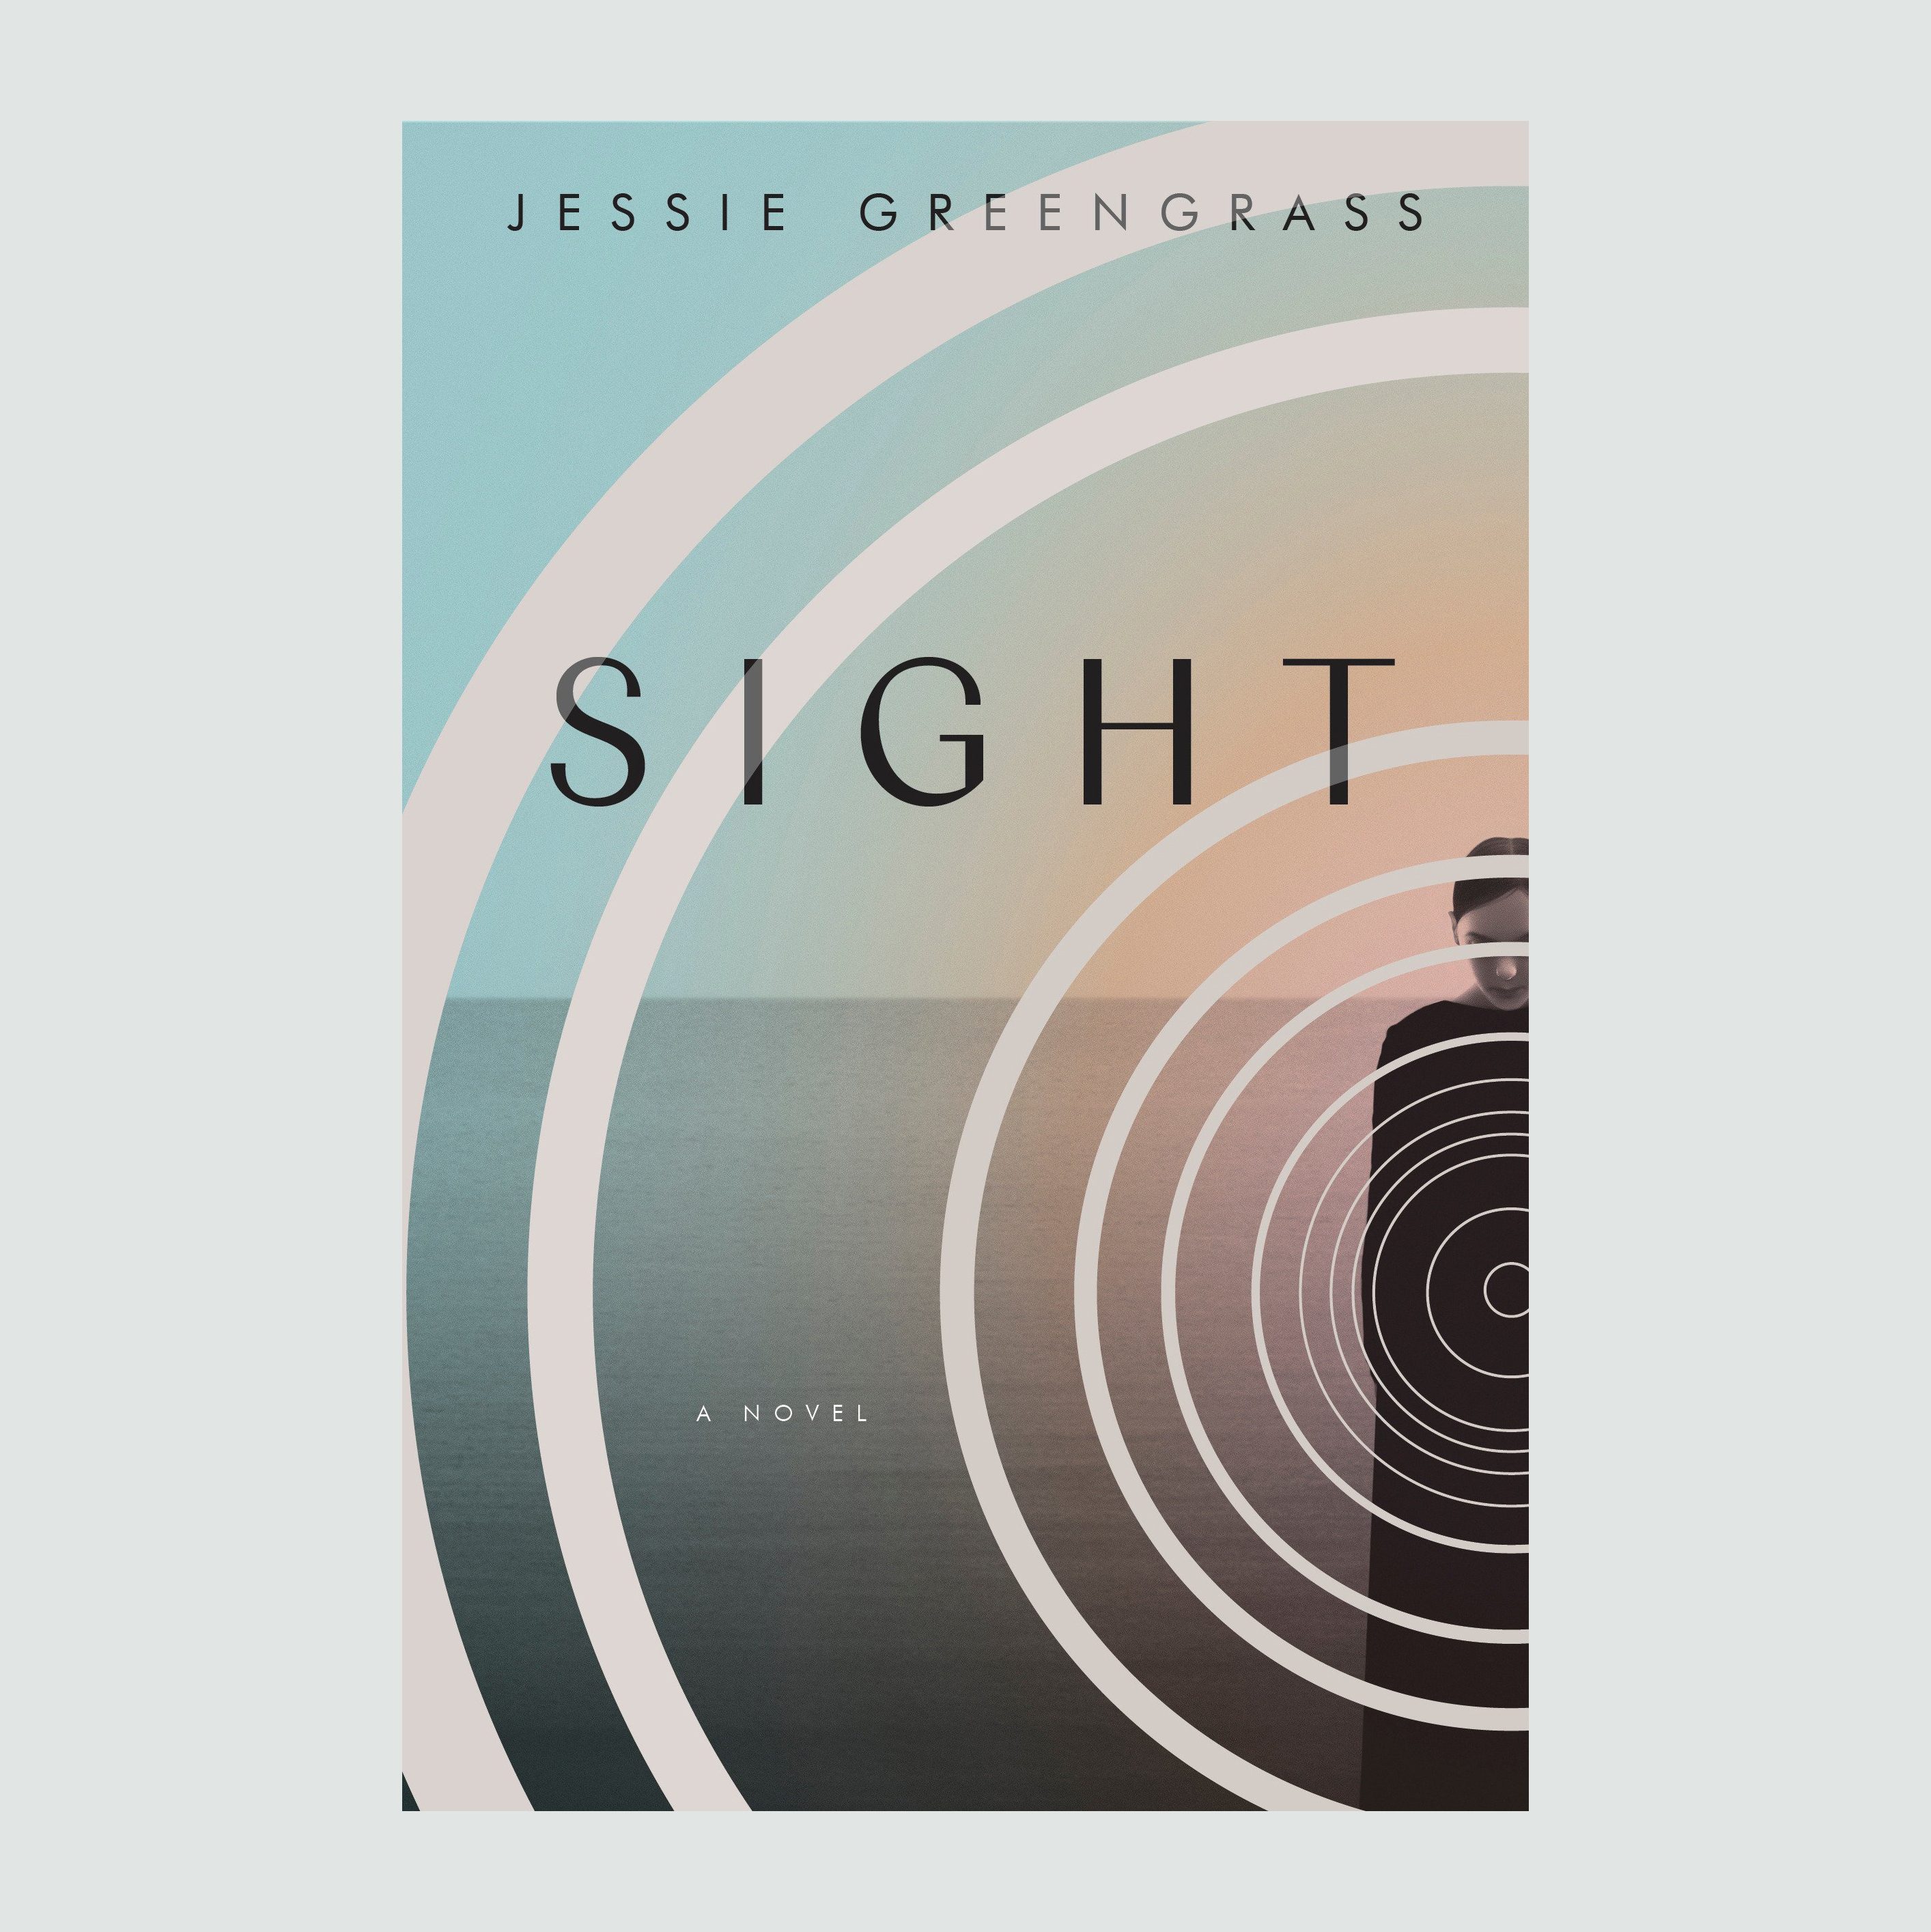 Jessie Greengrass book sight author